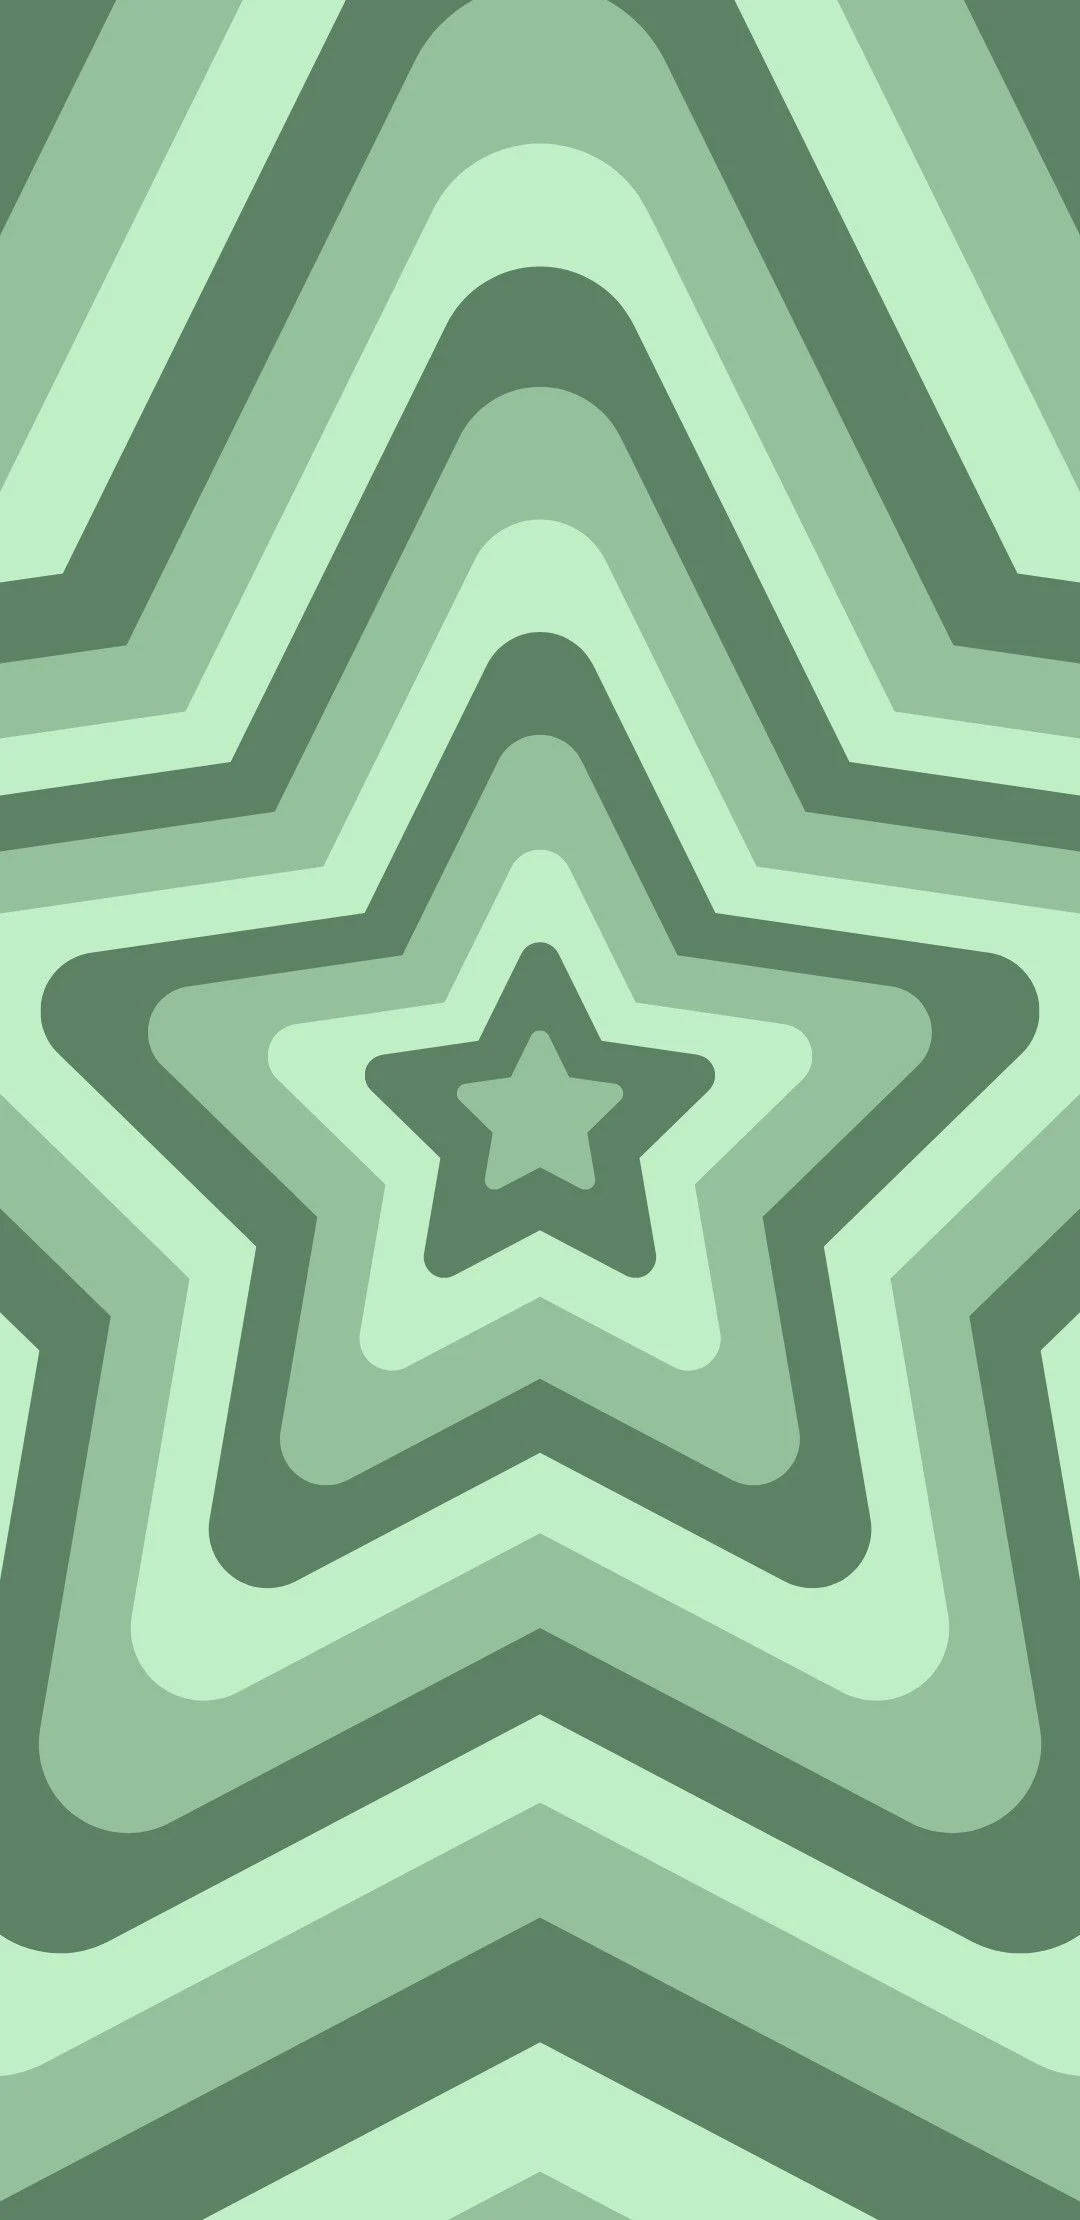 Elegant Preppy Pfp with Green Star pattern Wallpaper